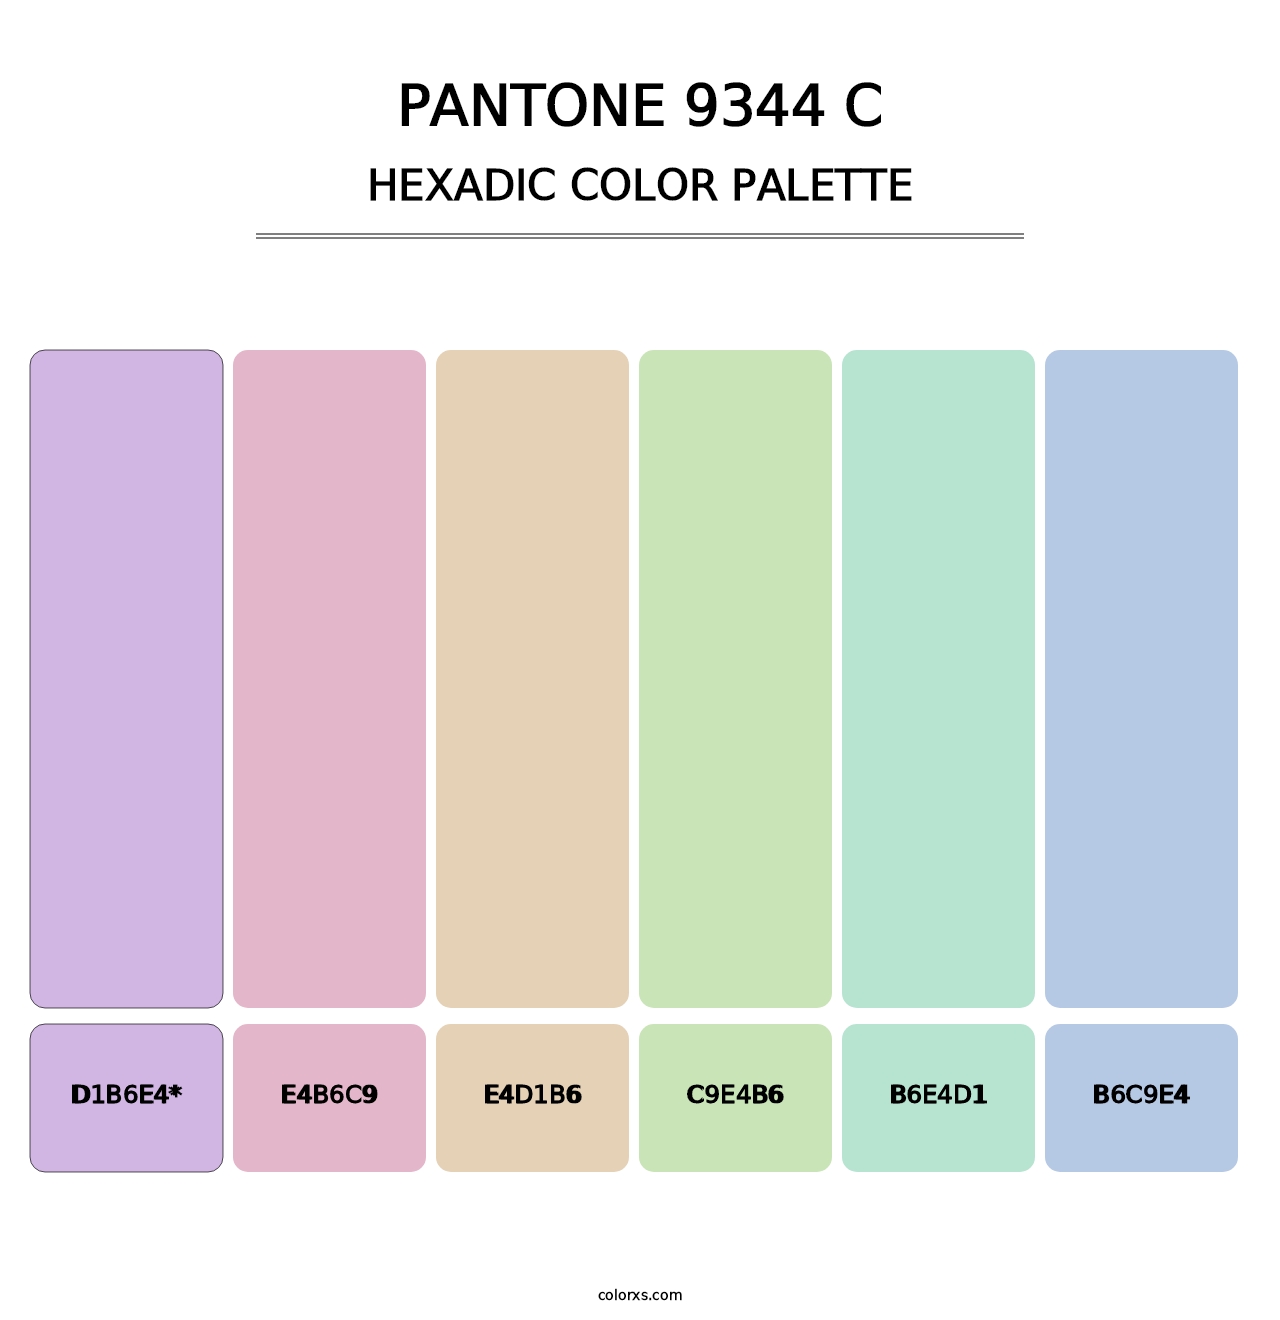 PANTONE 9344 C - Hexadic Color Palette